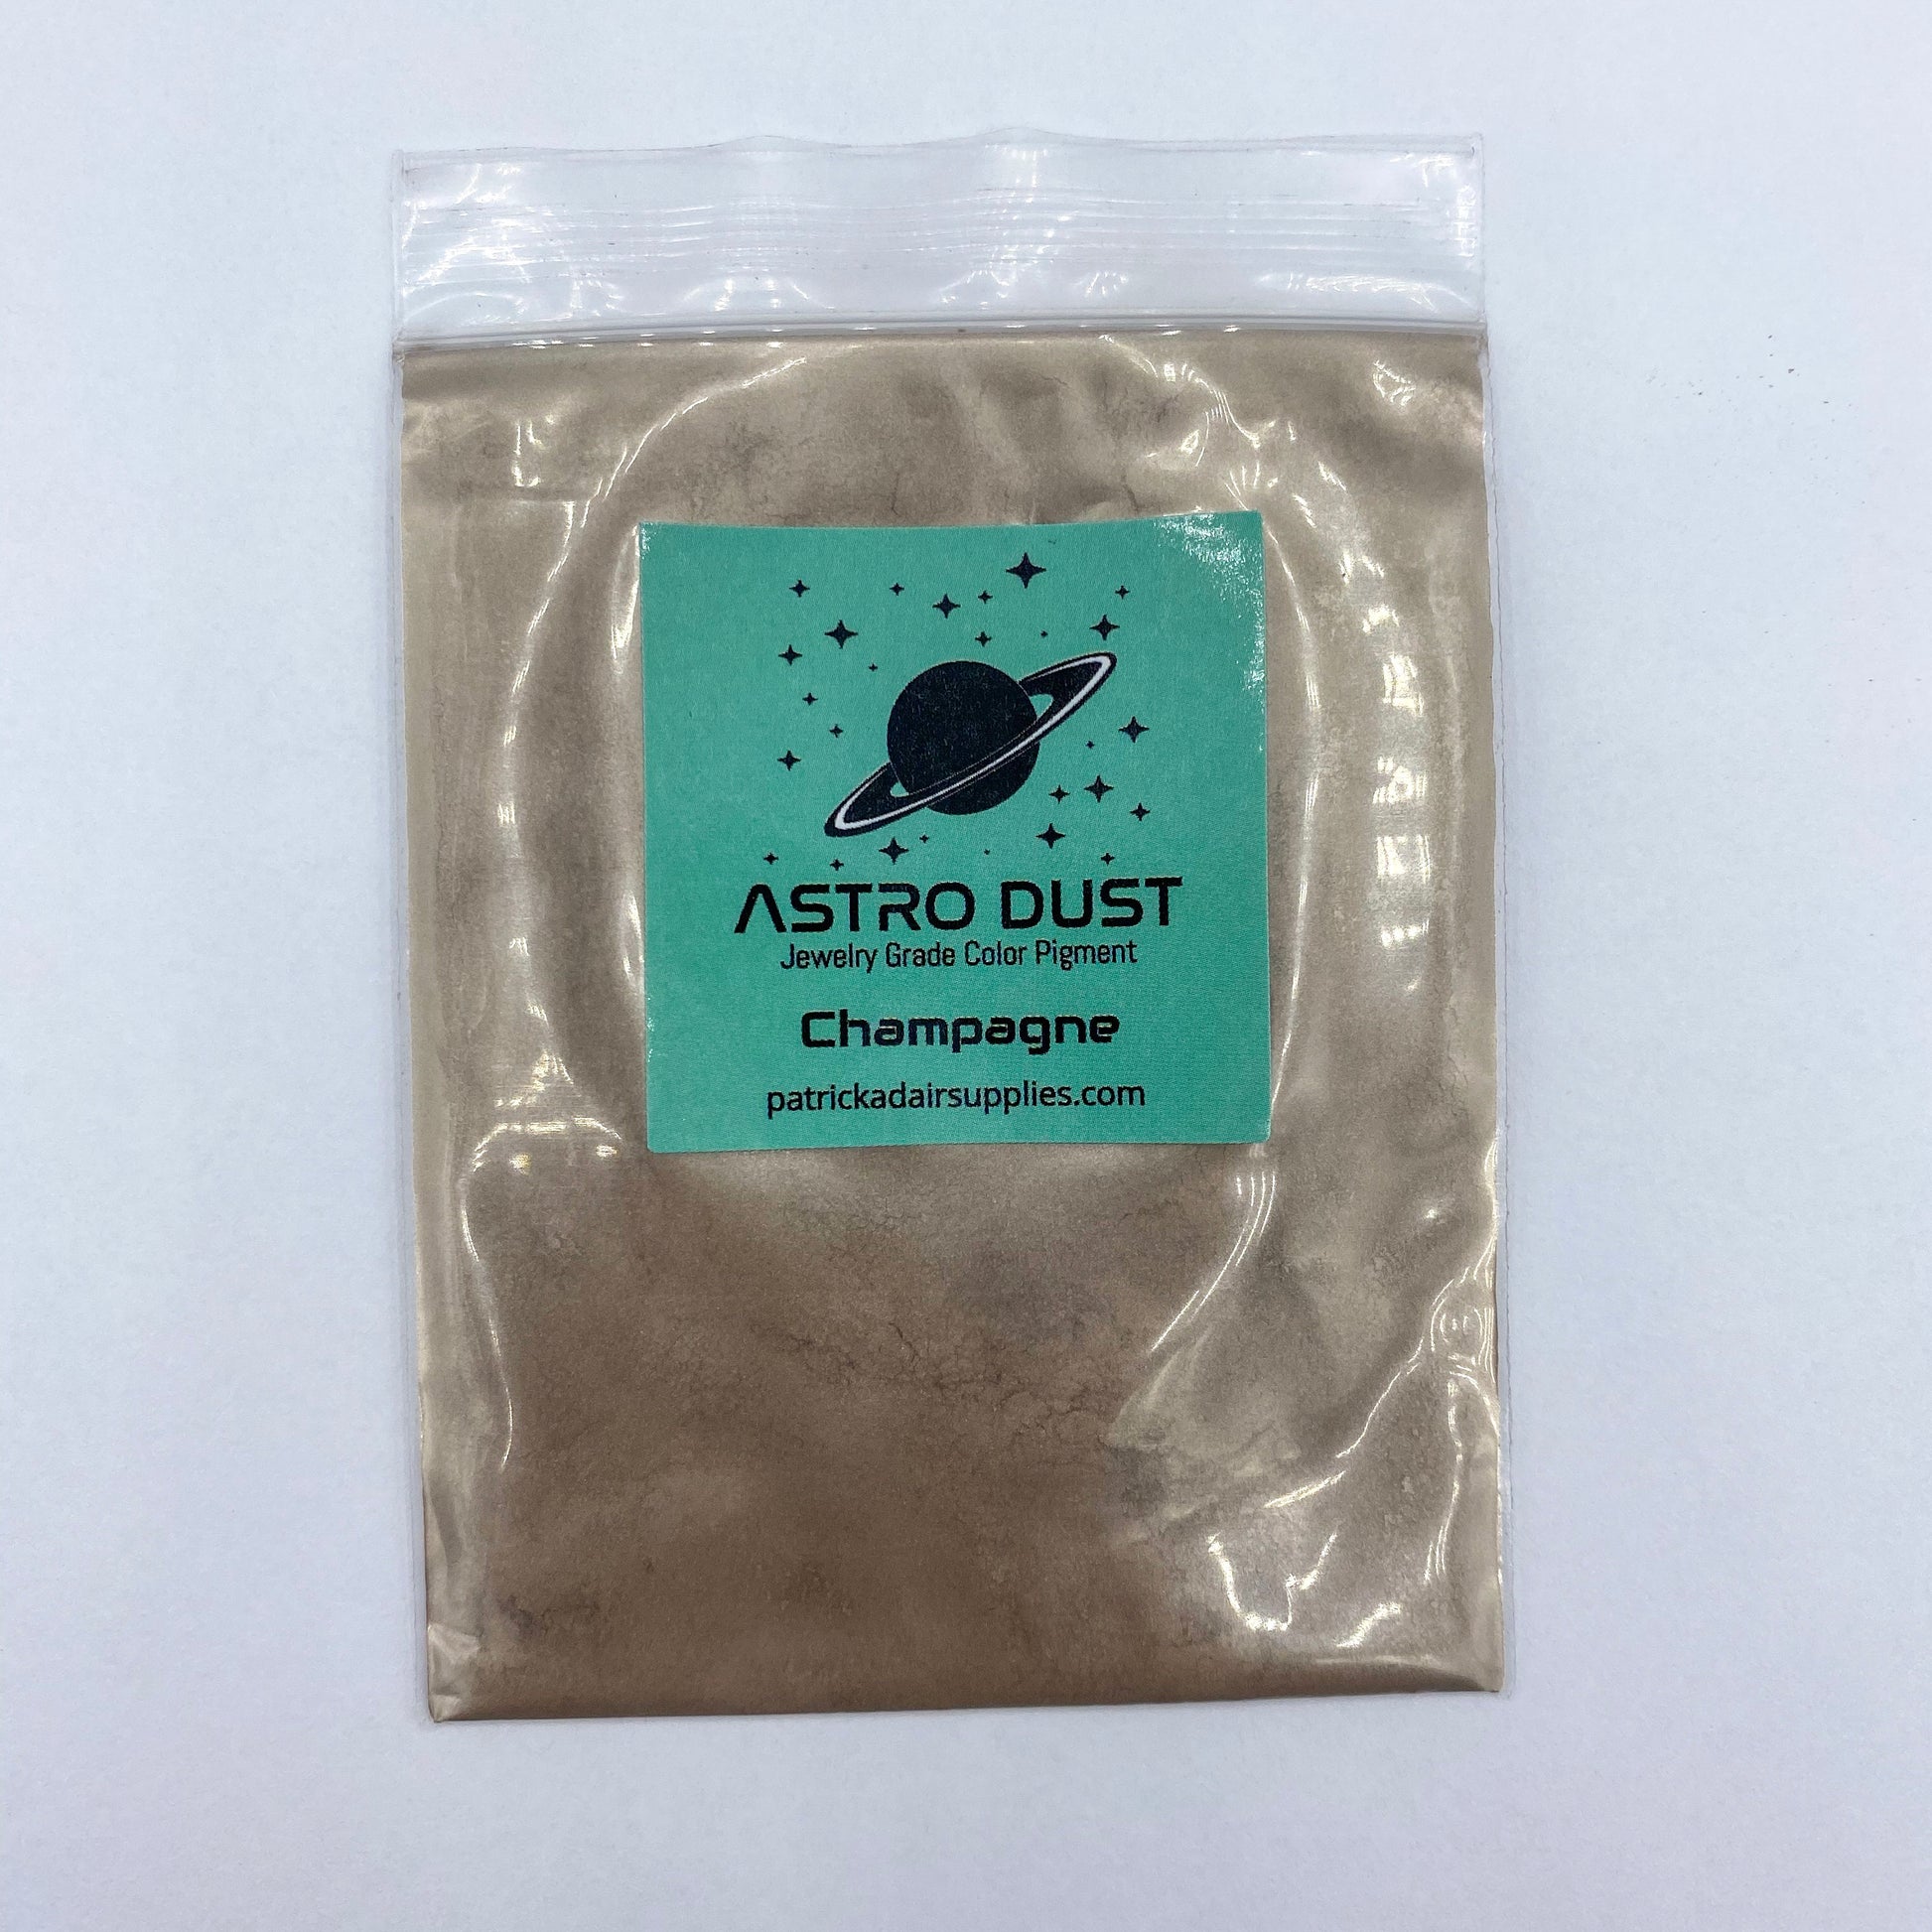 Astro Dust Champagne Color Pigment - Patrick Adair Supplies